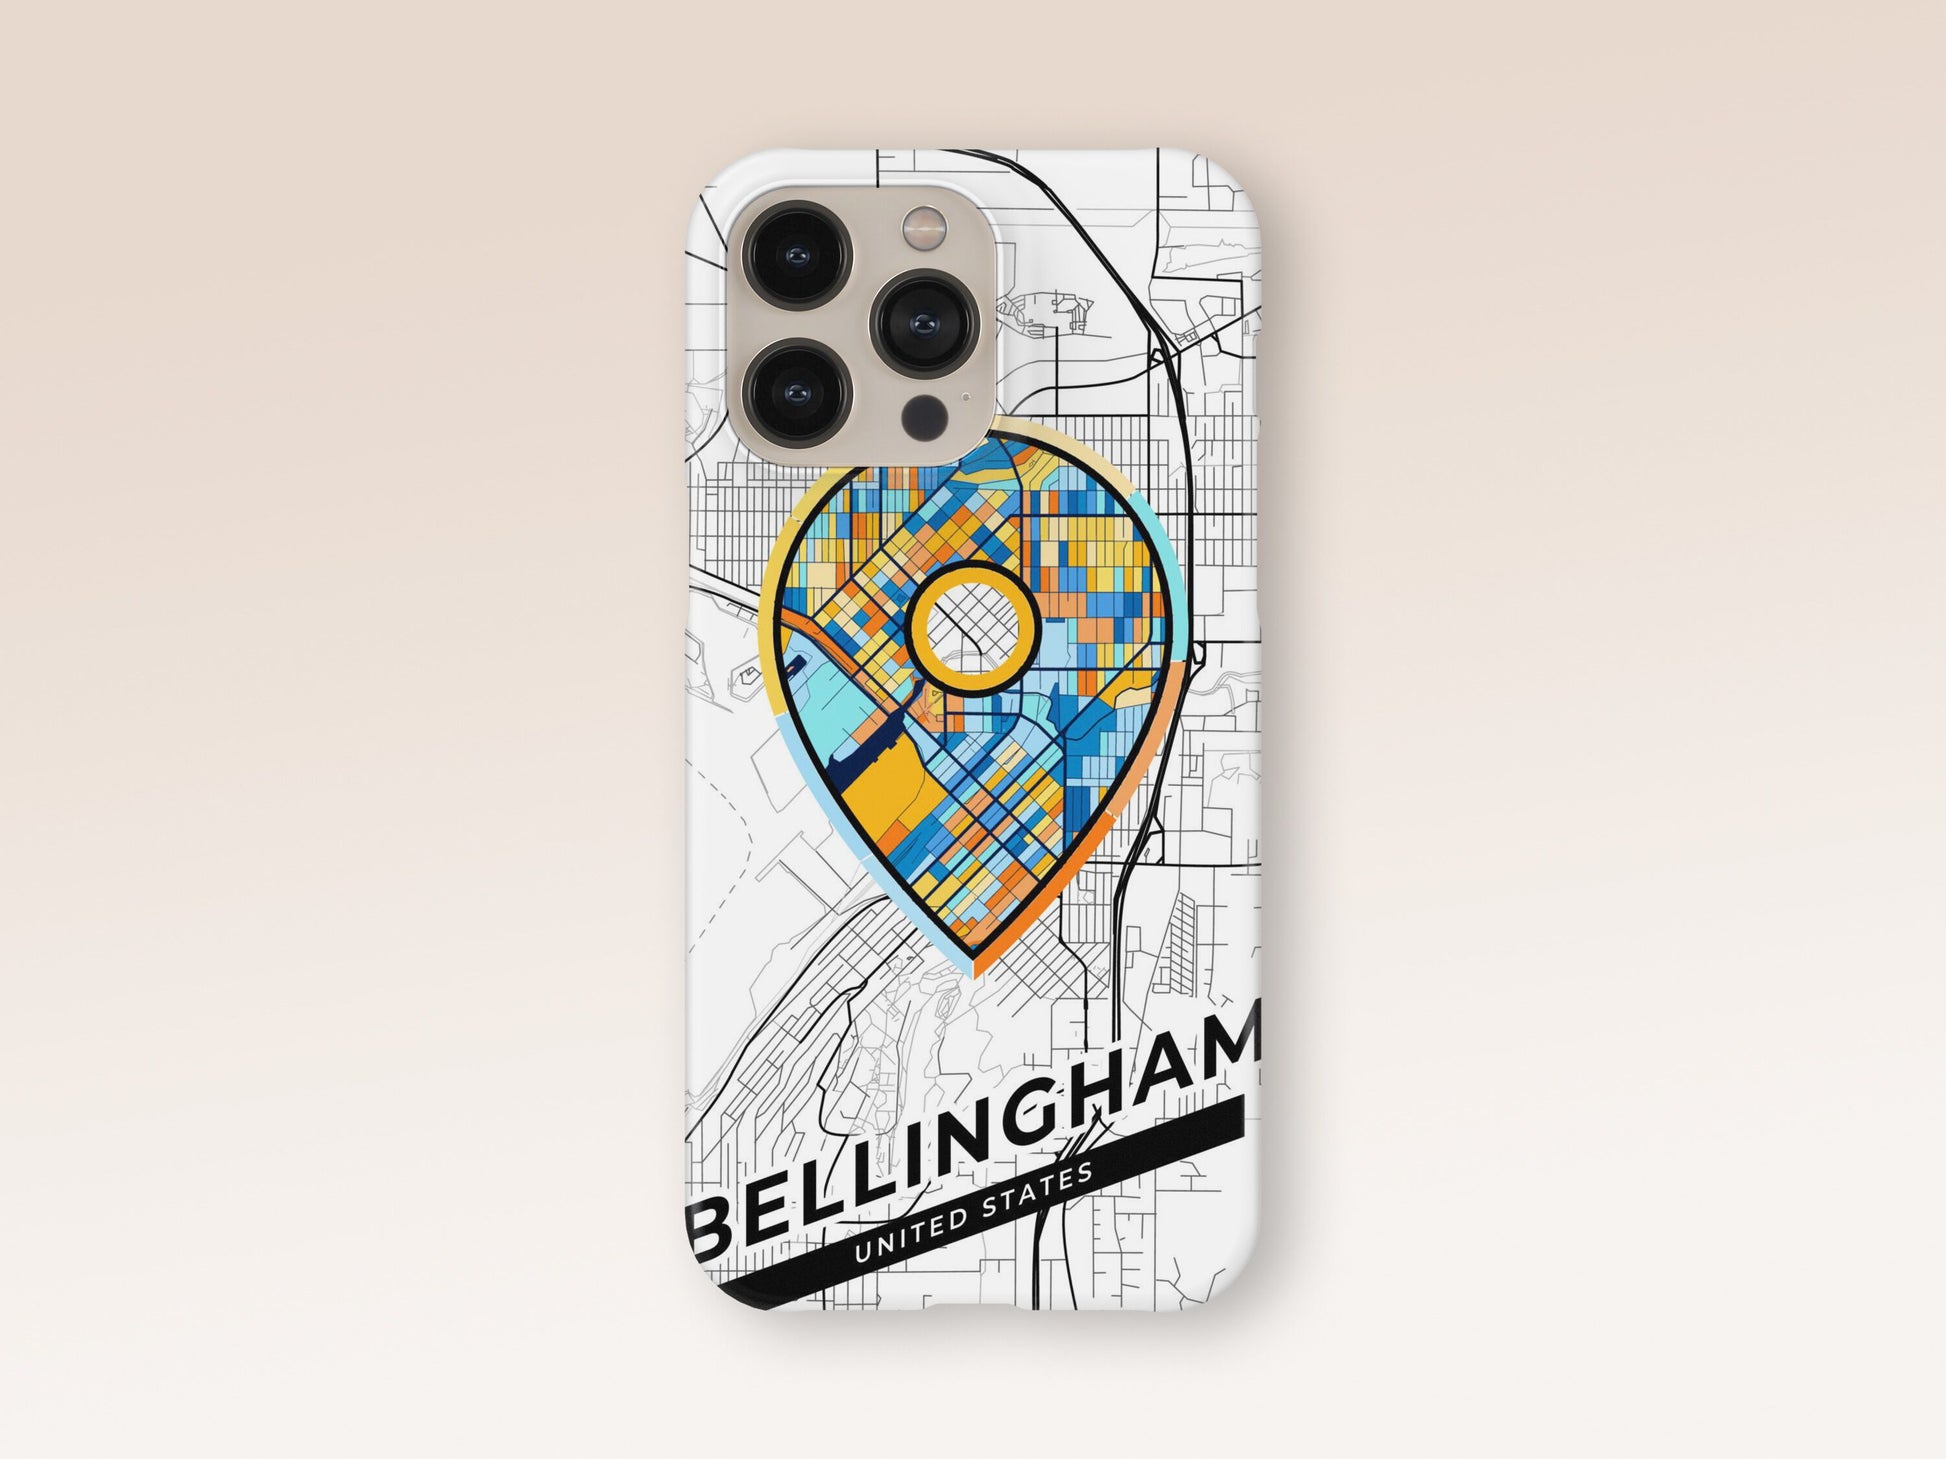 Bellingham Washington slim phone case with colorful icon. Birthday, wedding or housewarming gift. Couple match cases. 1